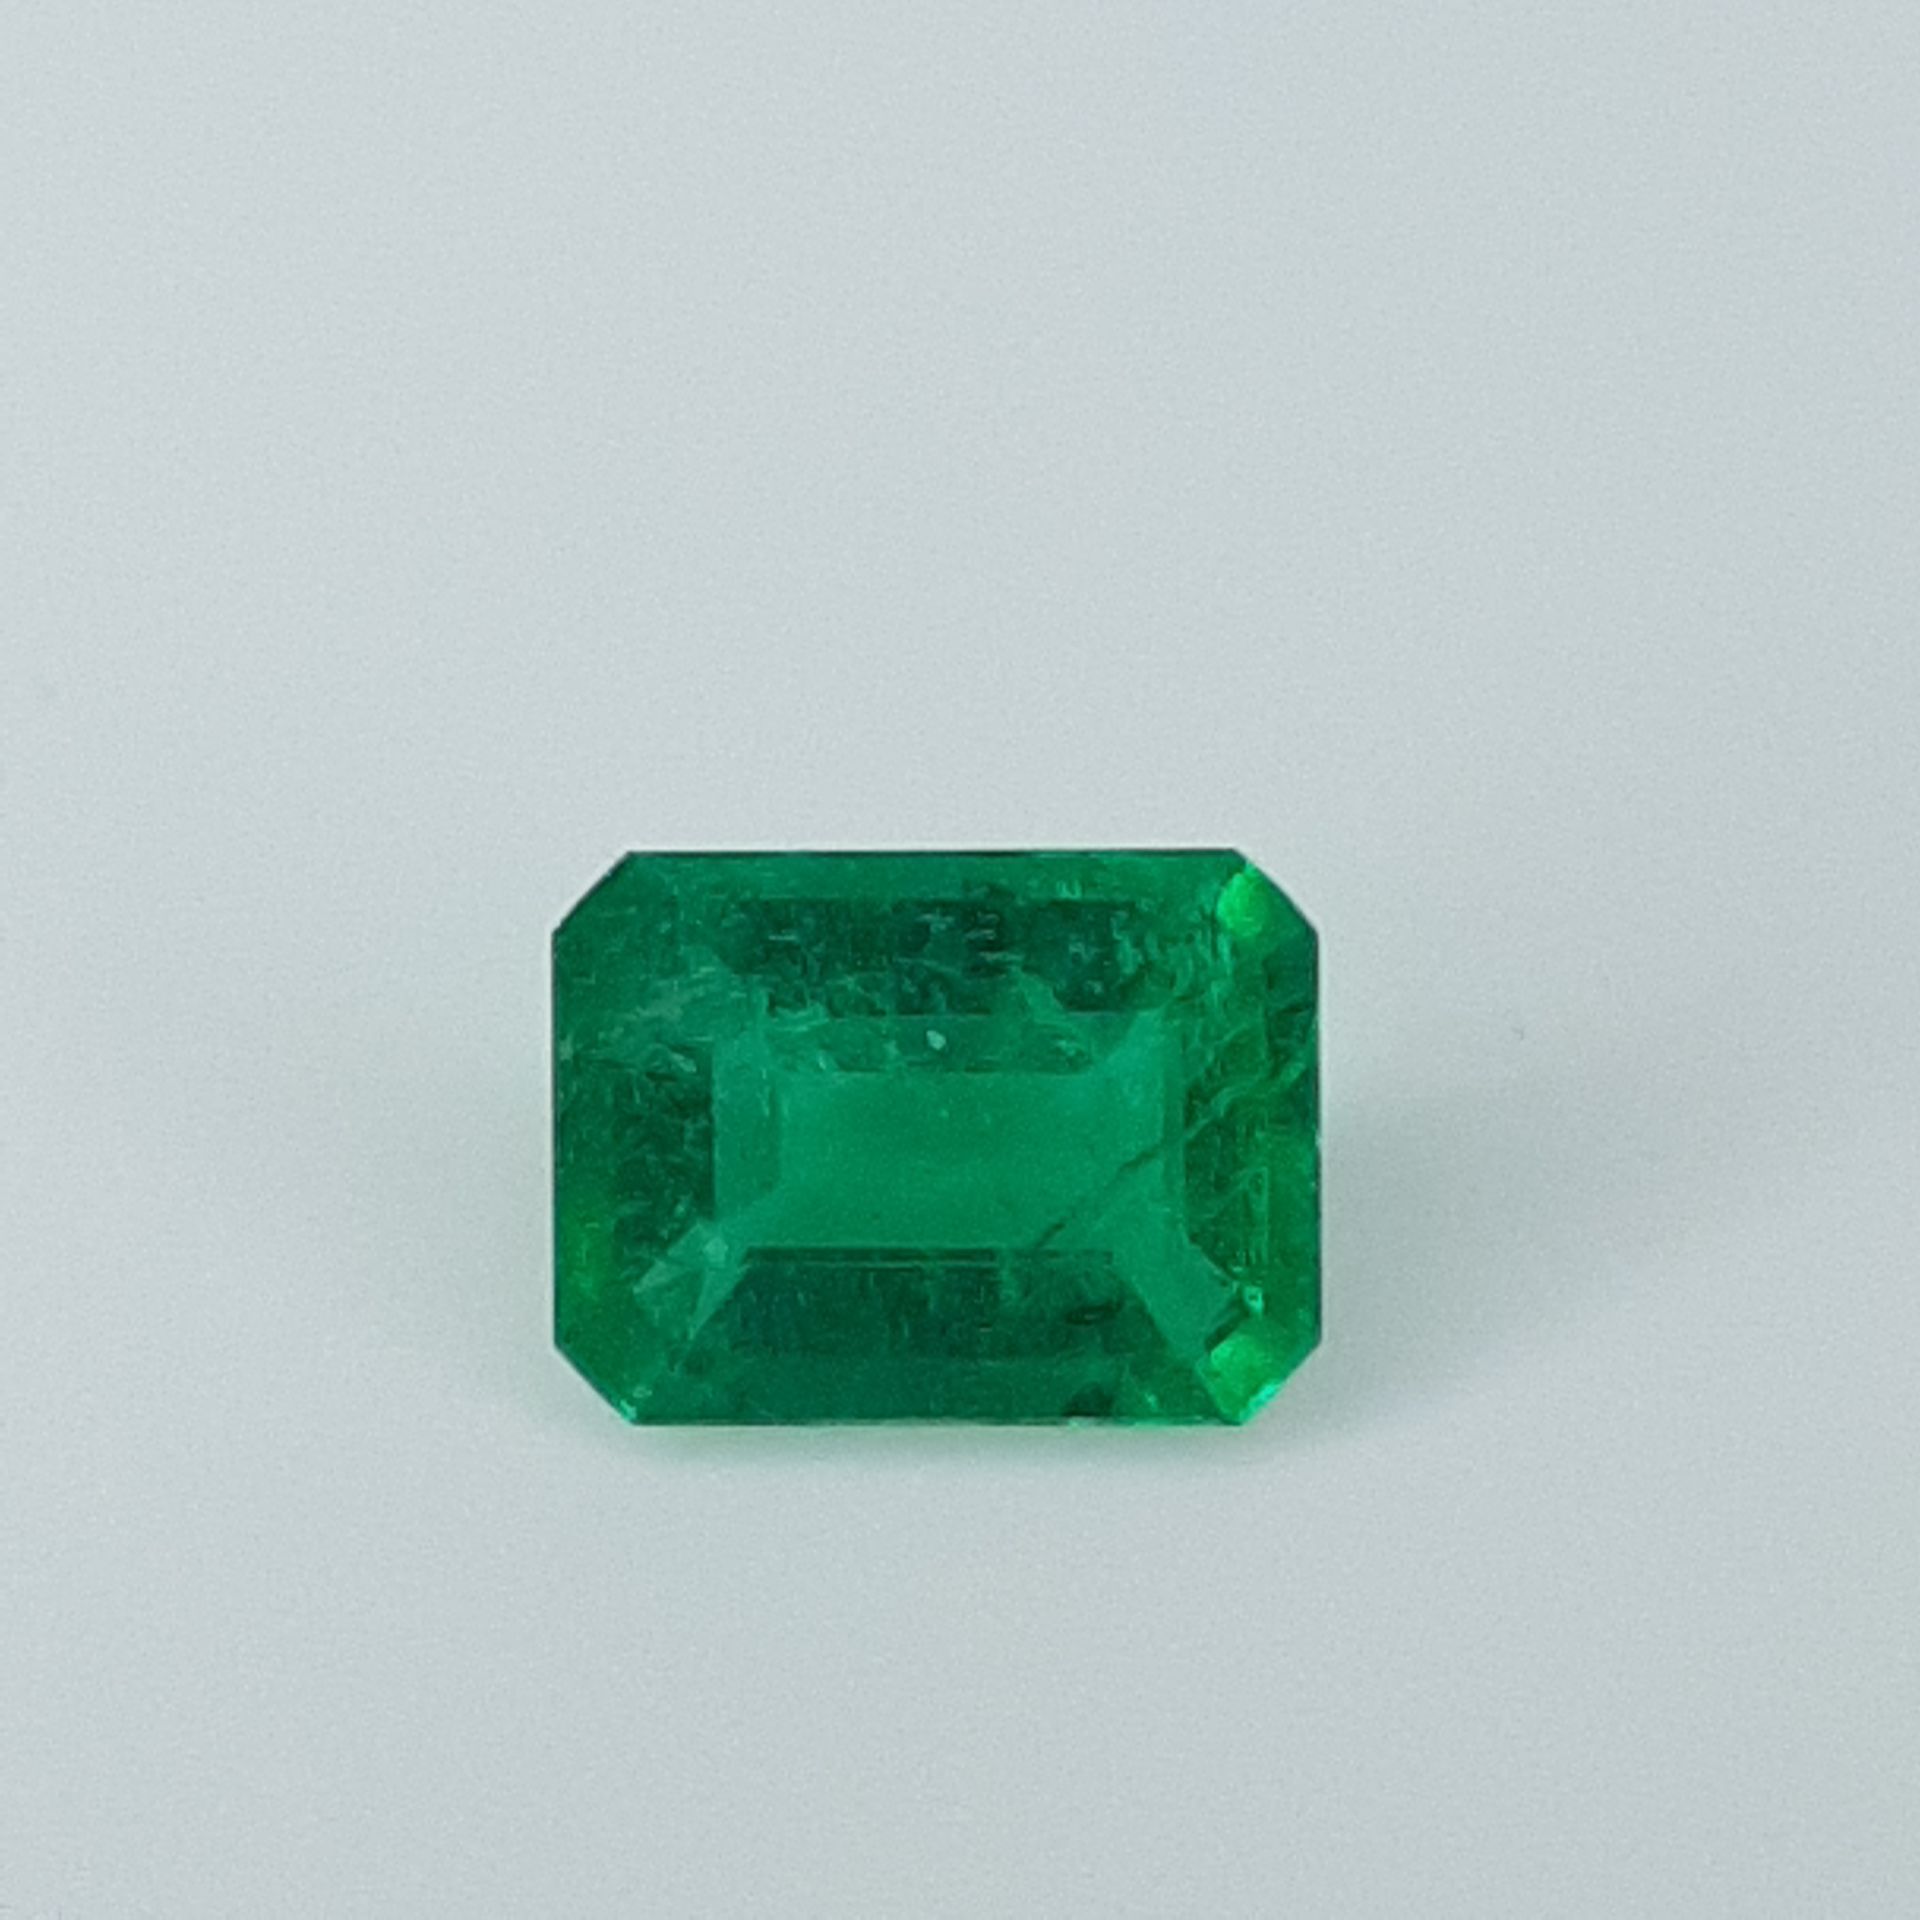 Emeraude - Brésil - 1.25 cts EMERAUDE - Herkunft Brasilien - Farbe grün-bläulich&hellip;